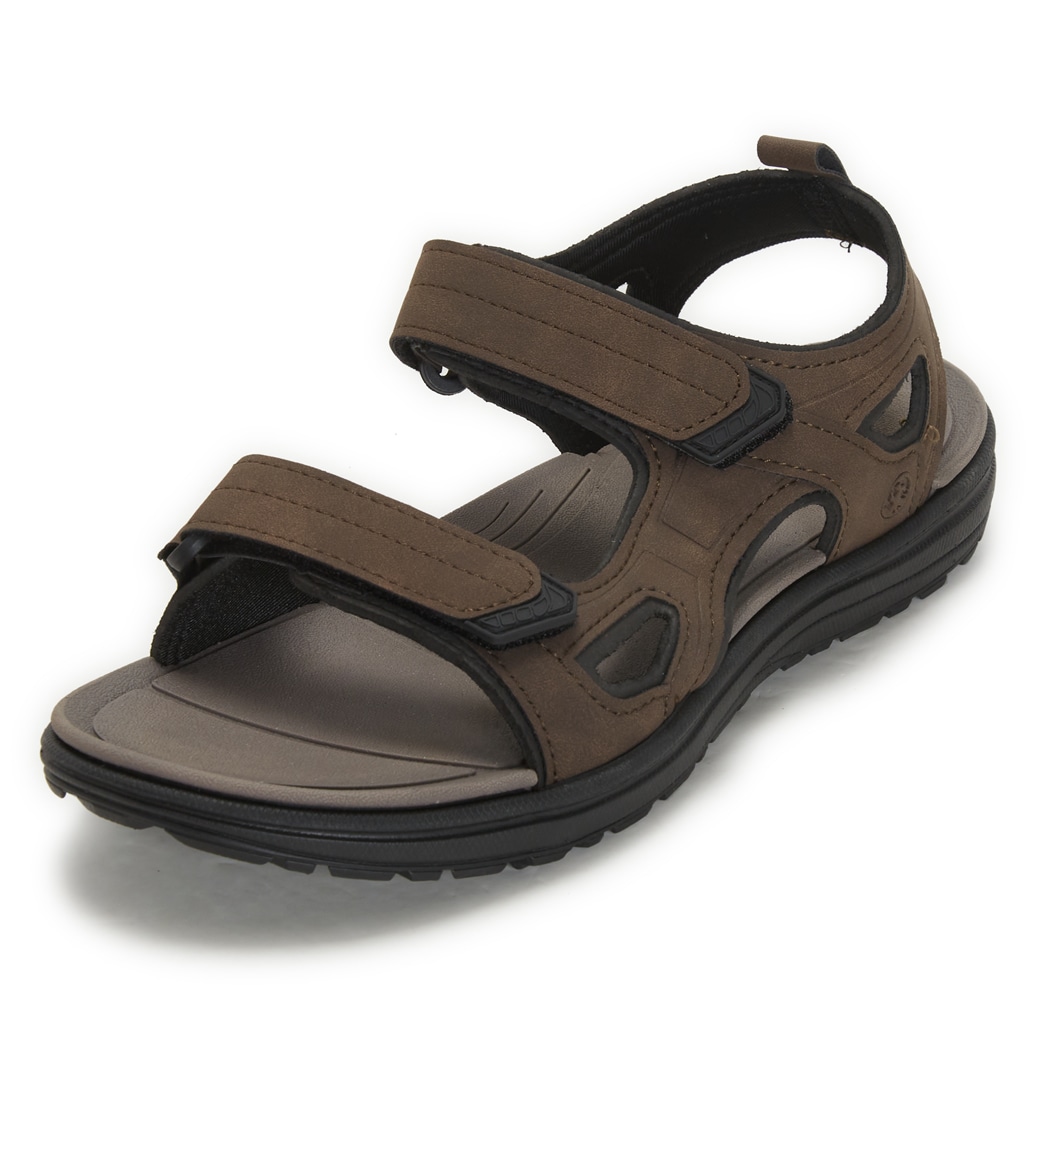 Northside Men's Riverside Lite Sport Sandals - Dark Brown 080 - Swimoutlet.com